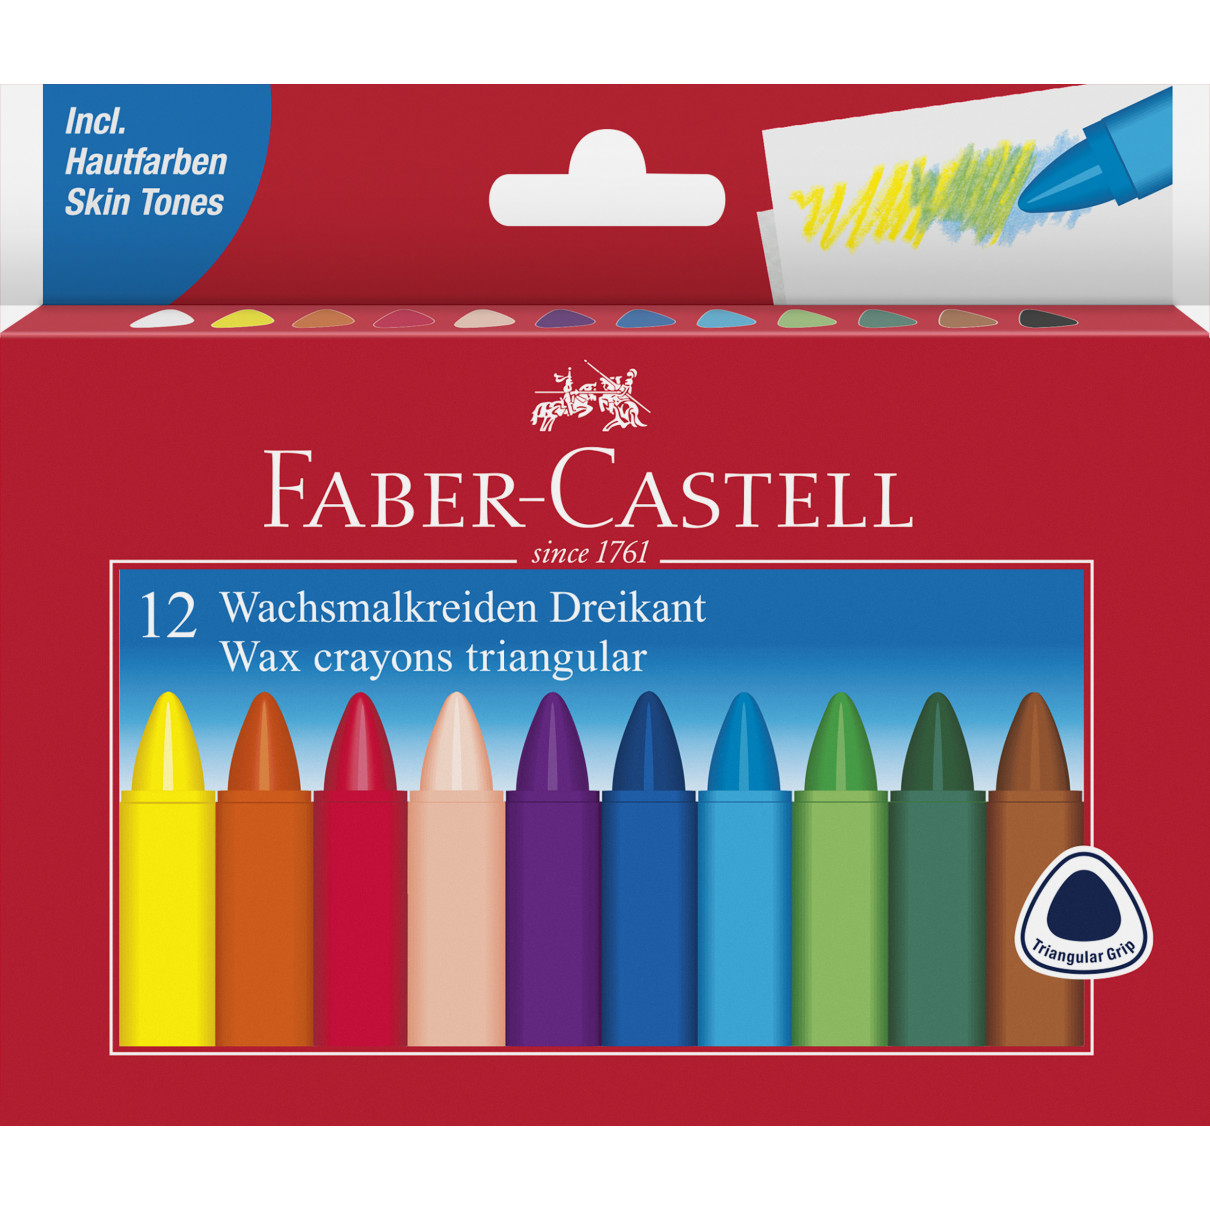 Faber-Castell Wax Triangular Crayons - Box of 12, 120010